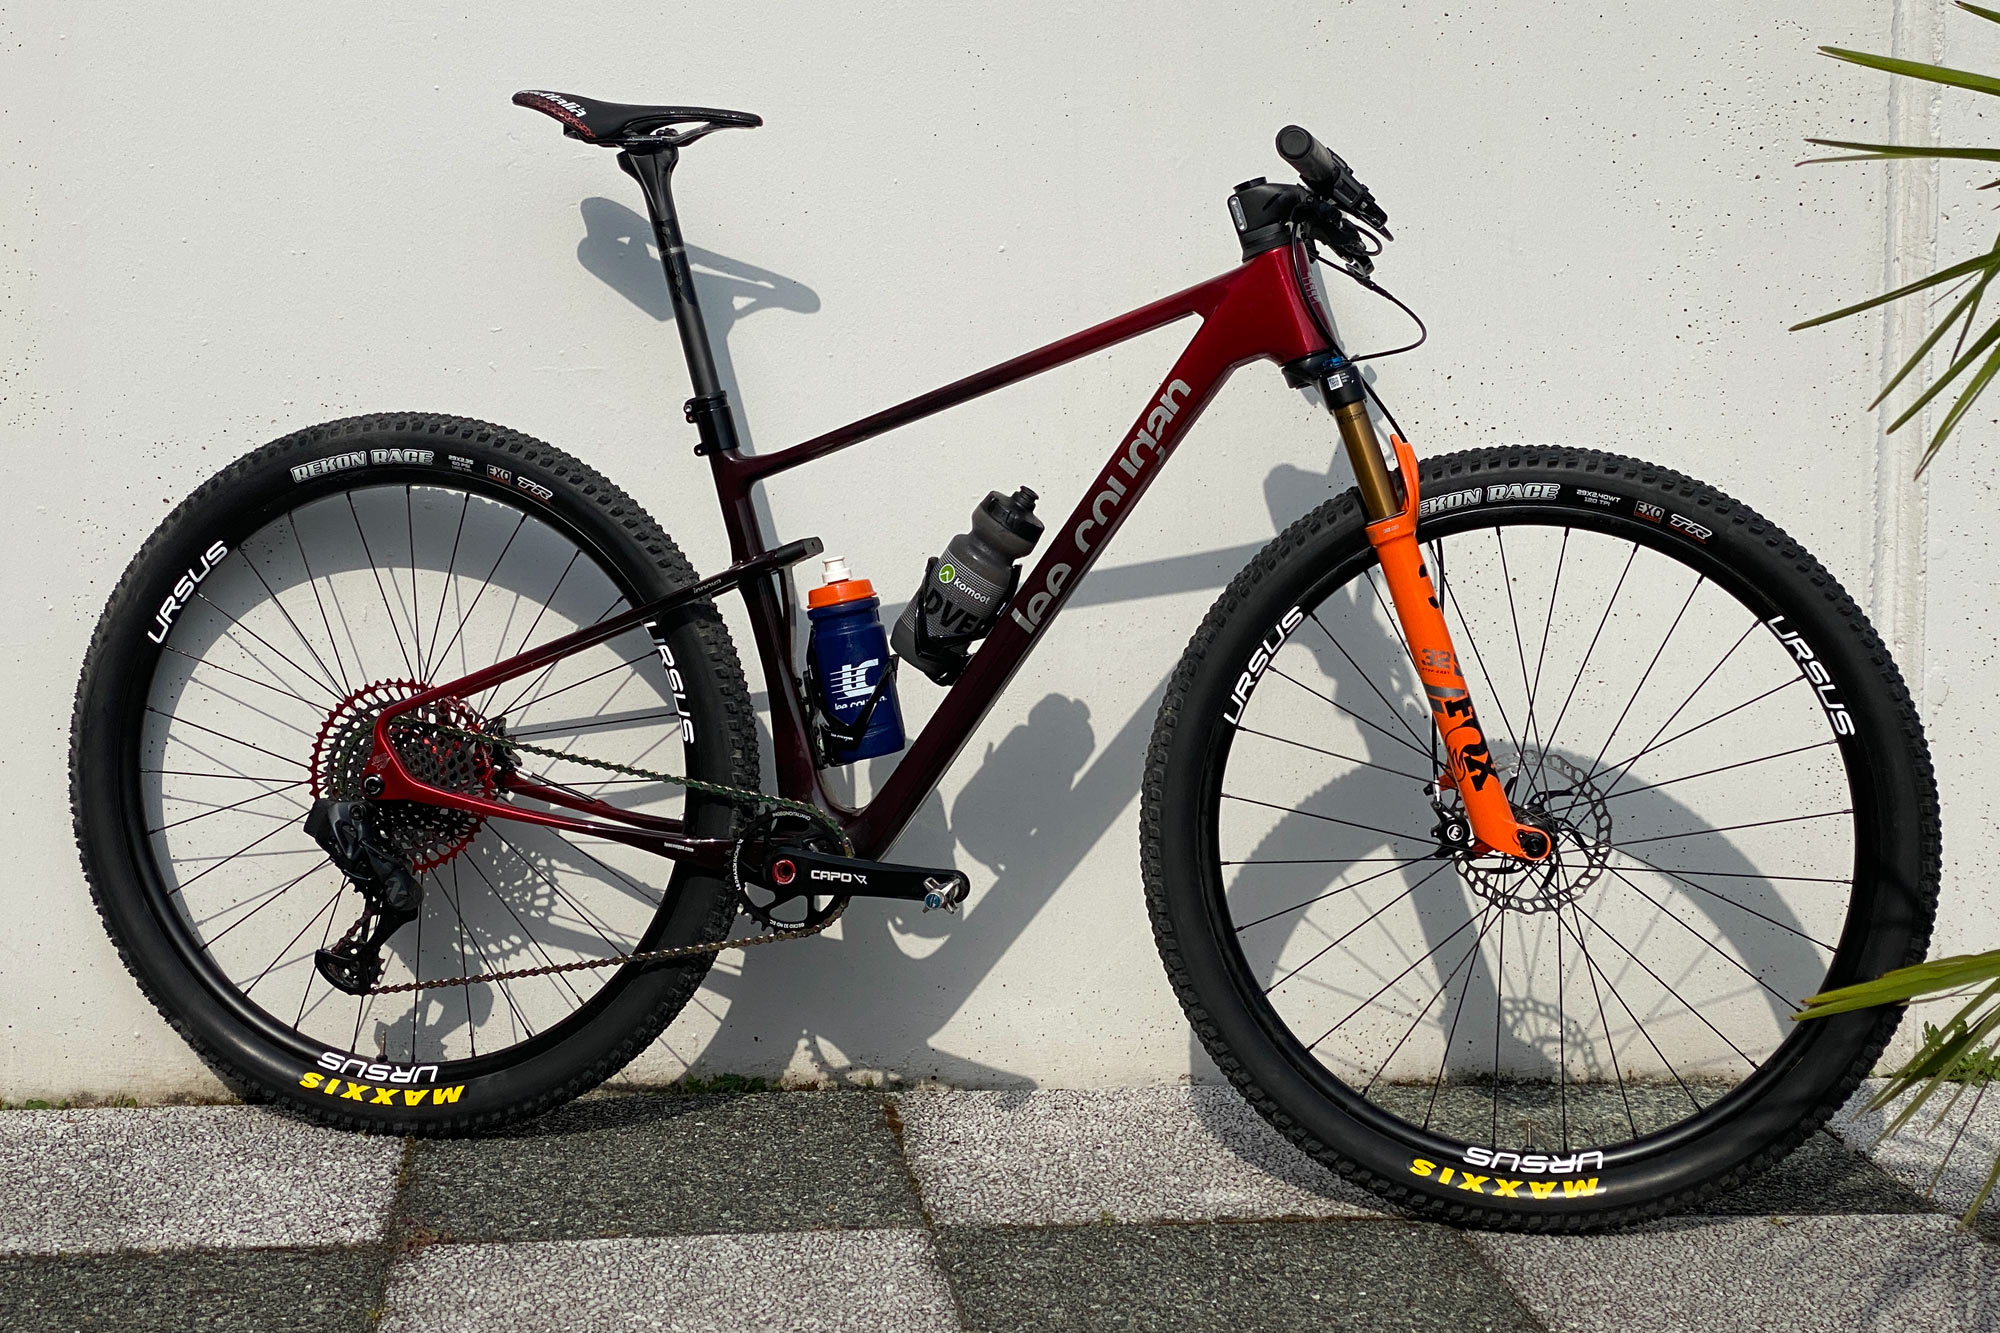 Lee Cougan Rampage Innova 30mm carbon XC MTB mountain bike softail, team replica complete